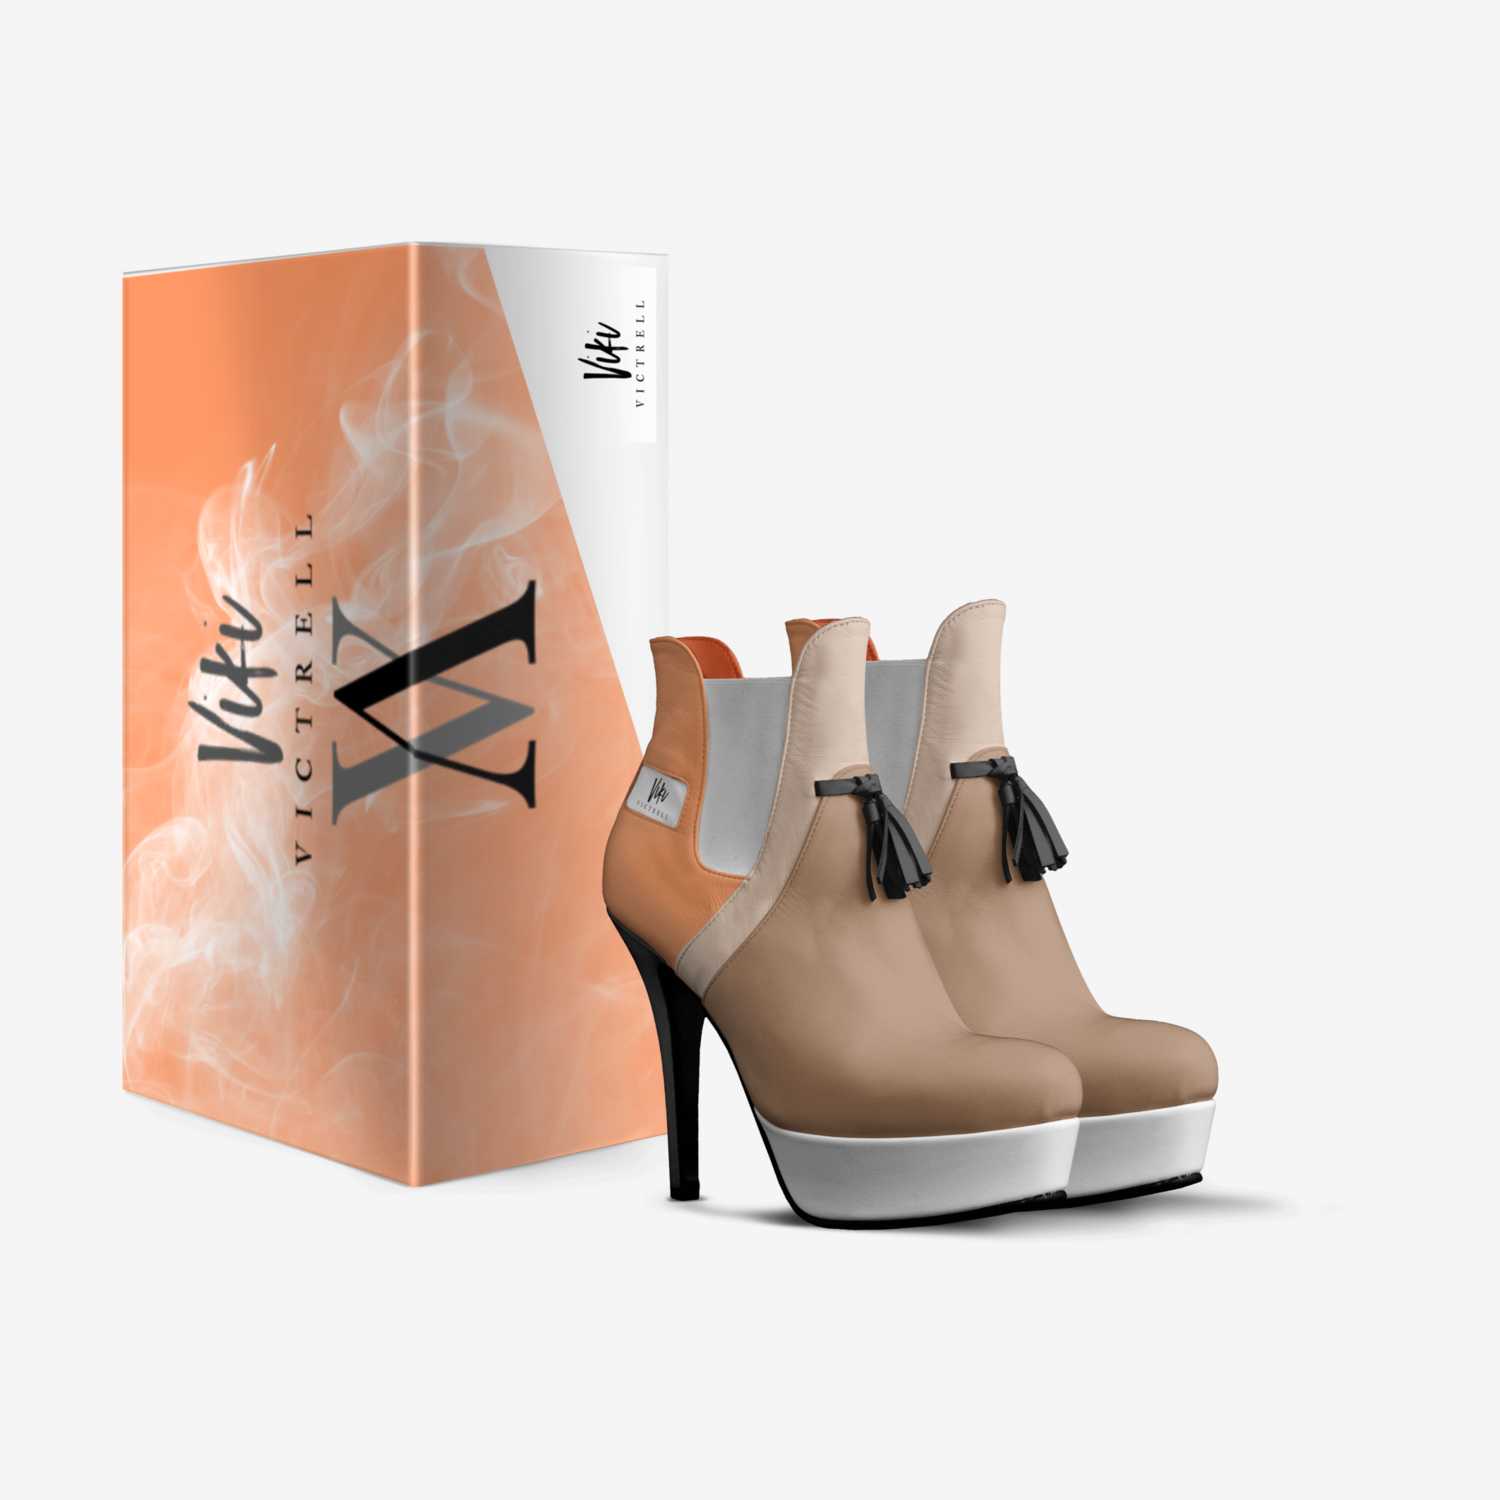 Viki Victrell custom made in Italy shoes by Lovevelya Copeland | Box view